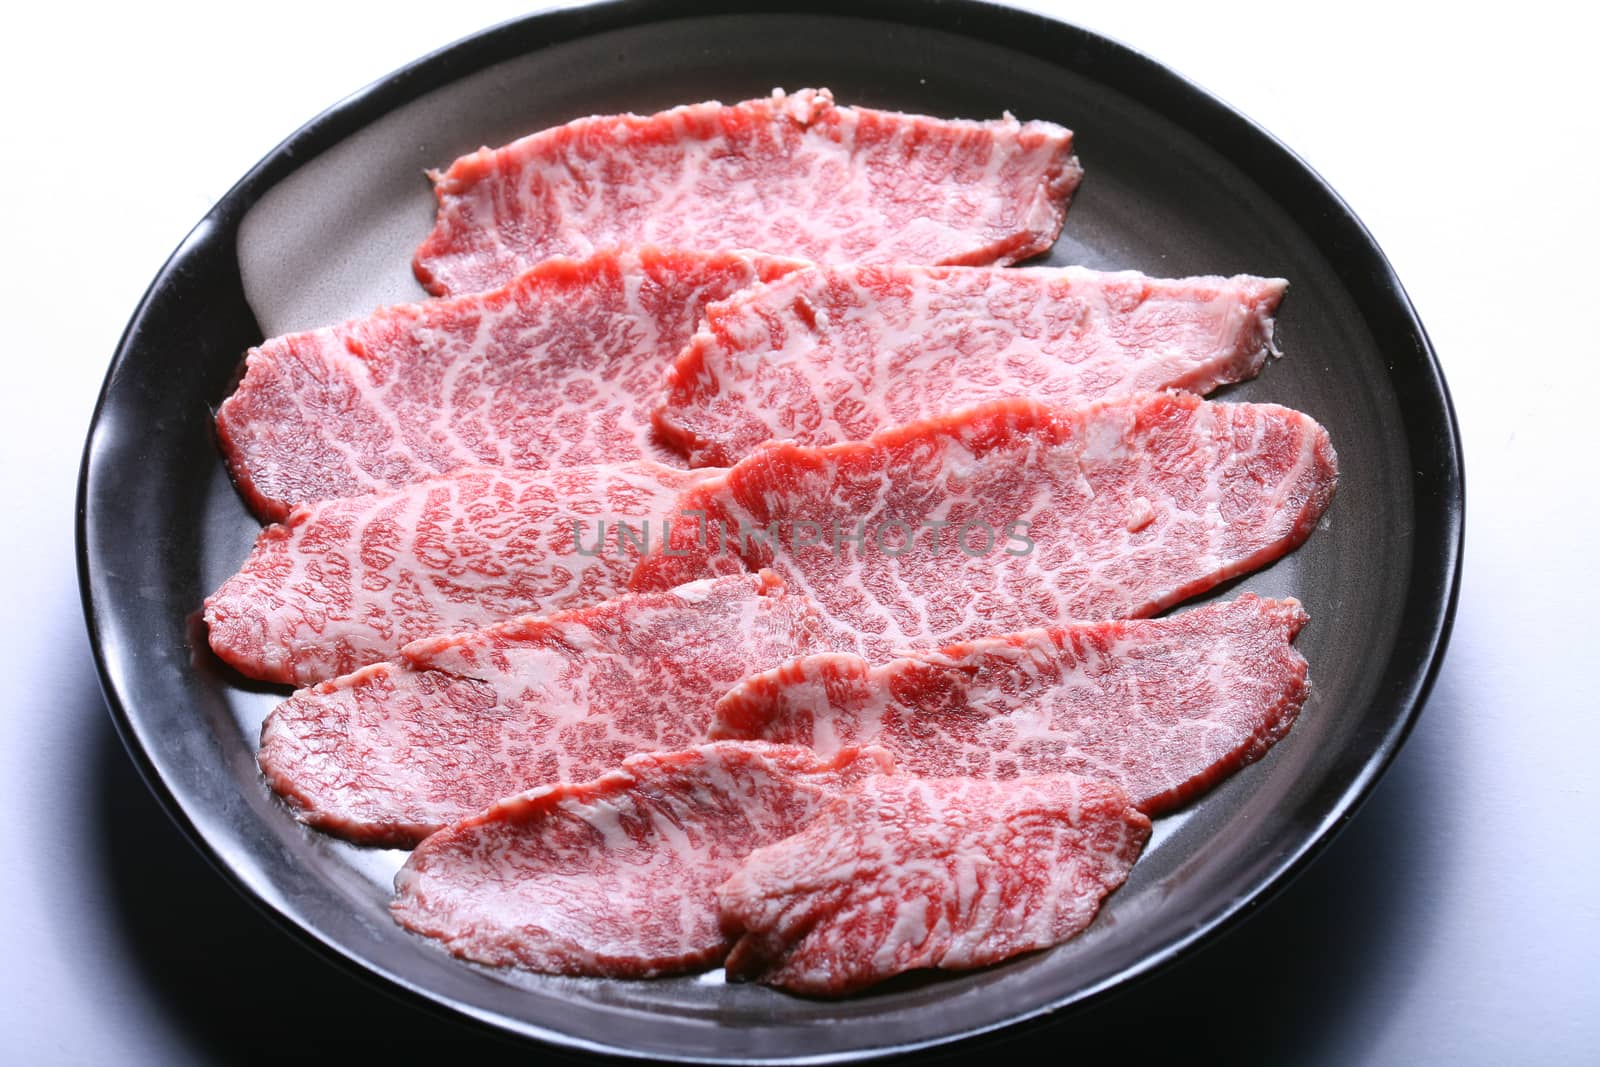 Raw Kobe wagyu beef sliced on black plate, white background